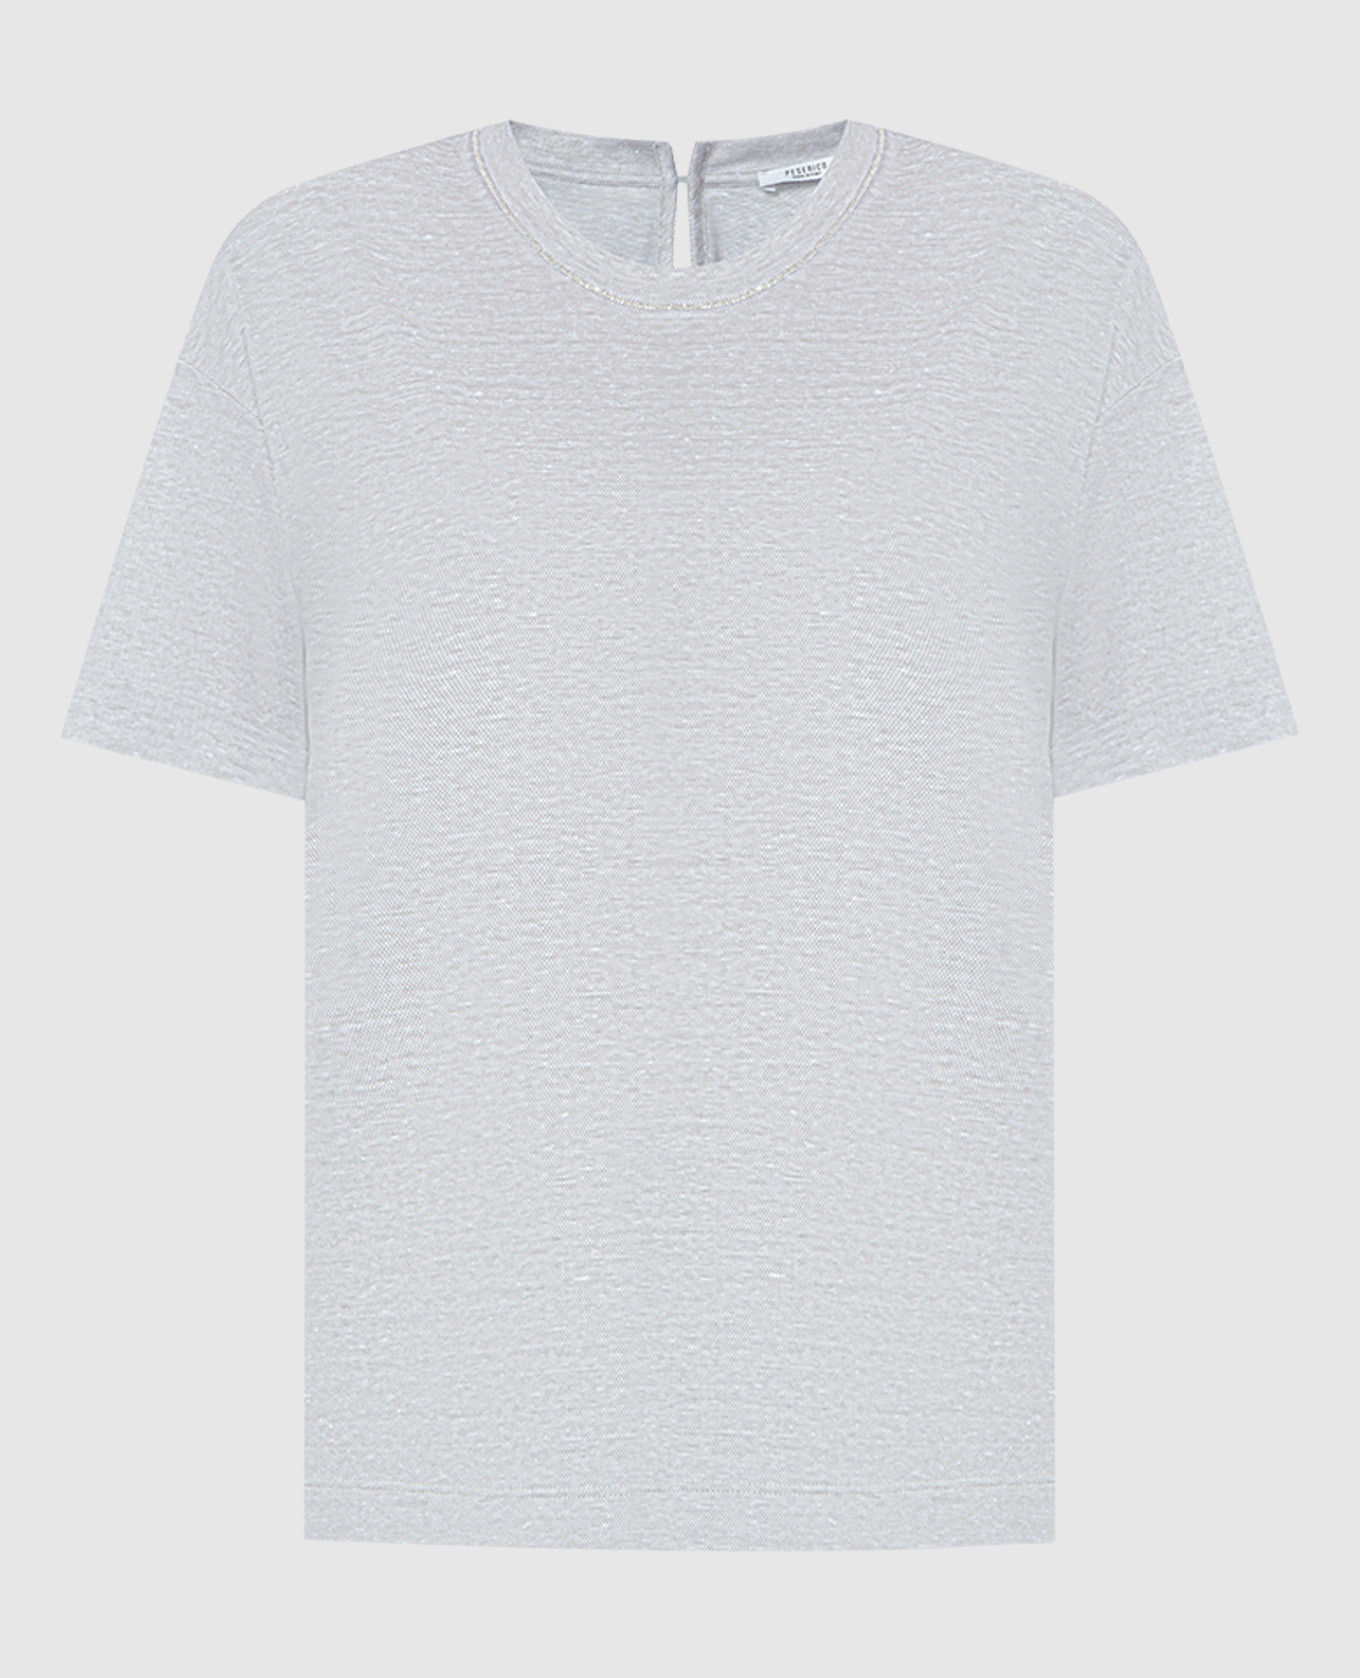 Gray linen t-shirt with monil chain